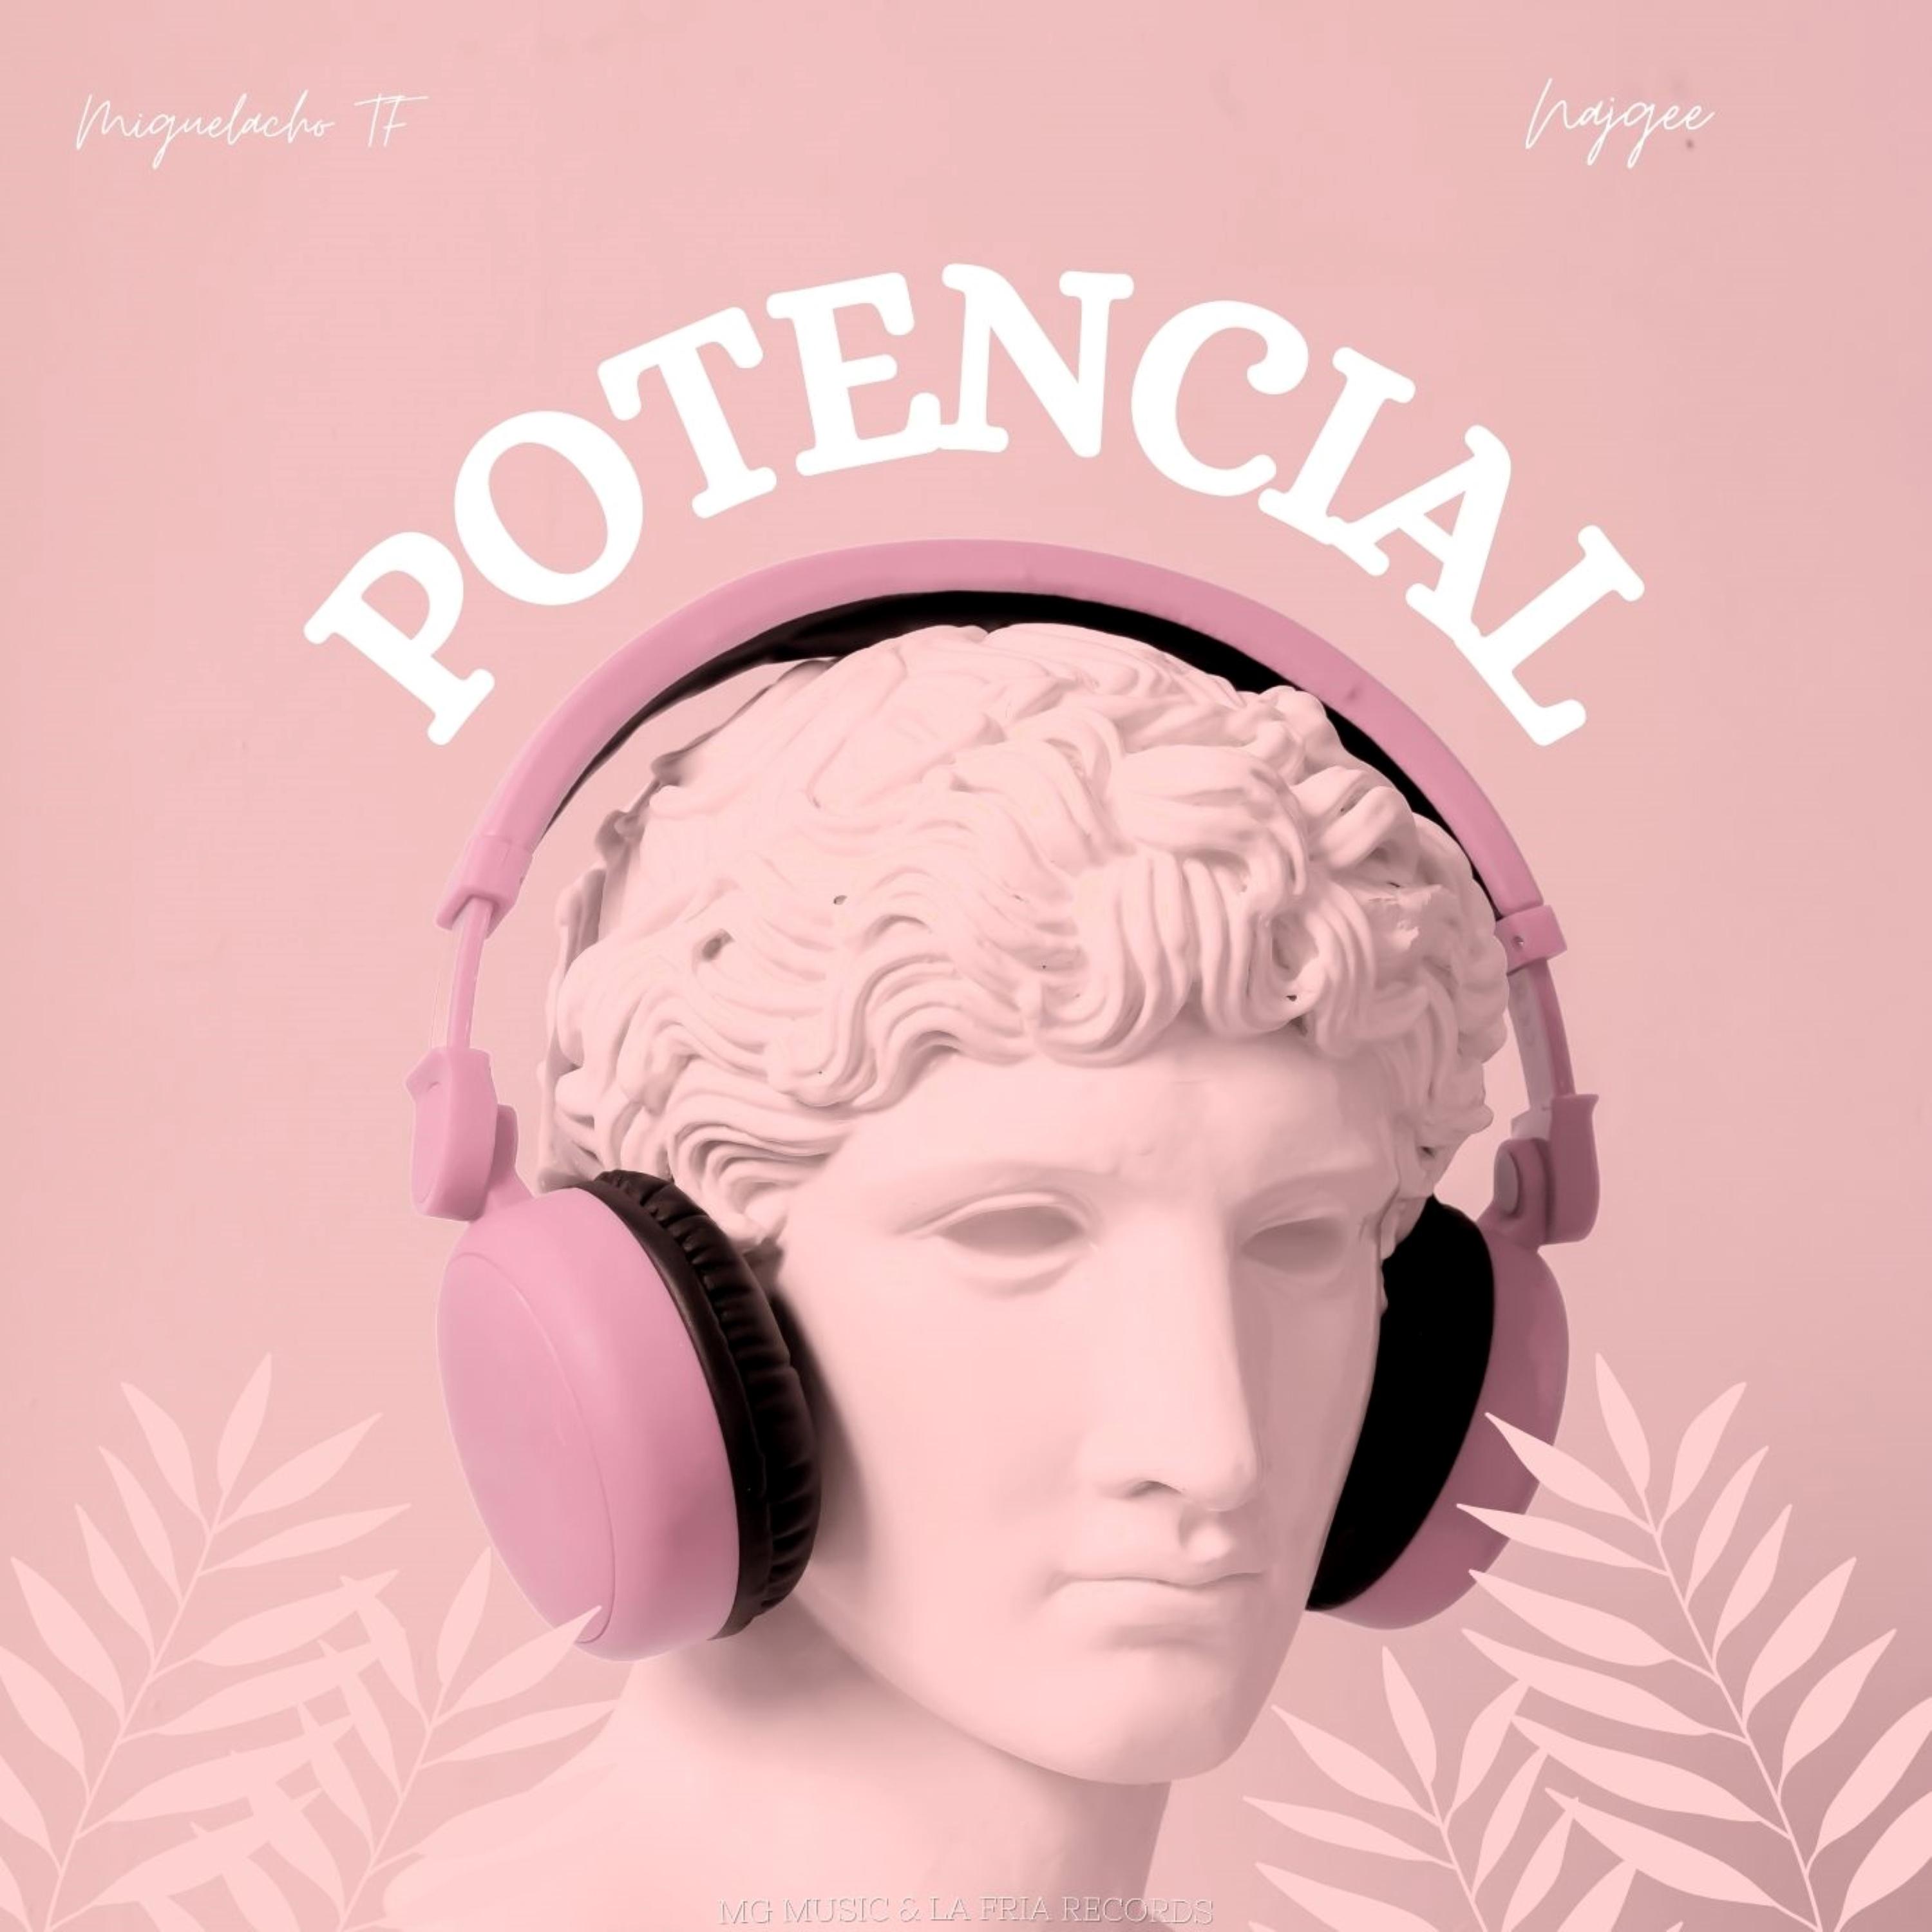 Постер альбома Potencial